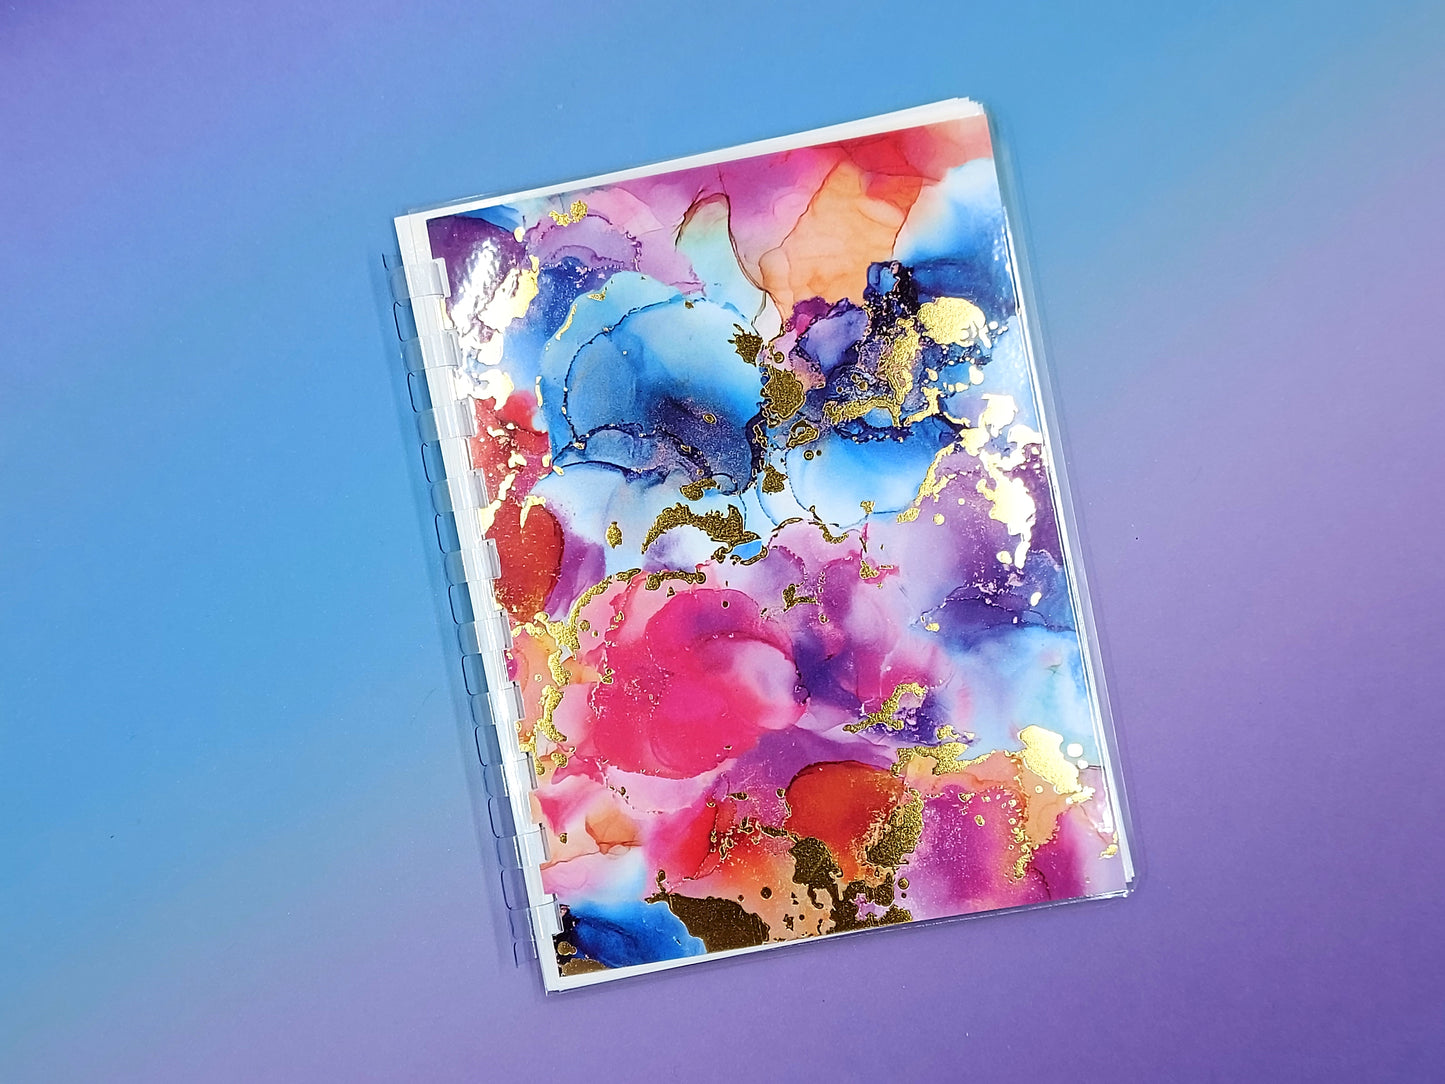 Reusable Sticker Storage Book Album - Swirled Ink Cover 8